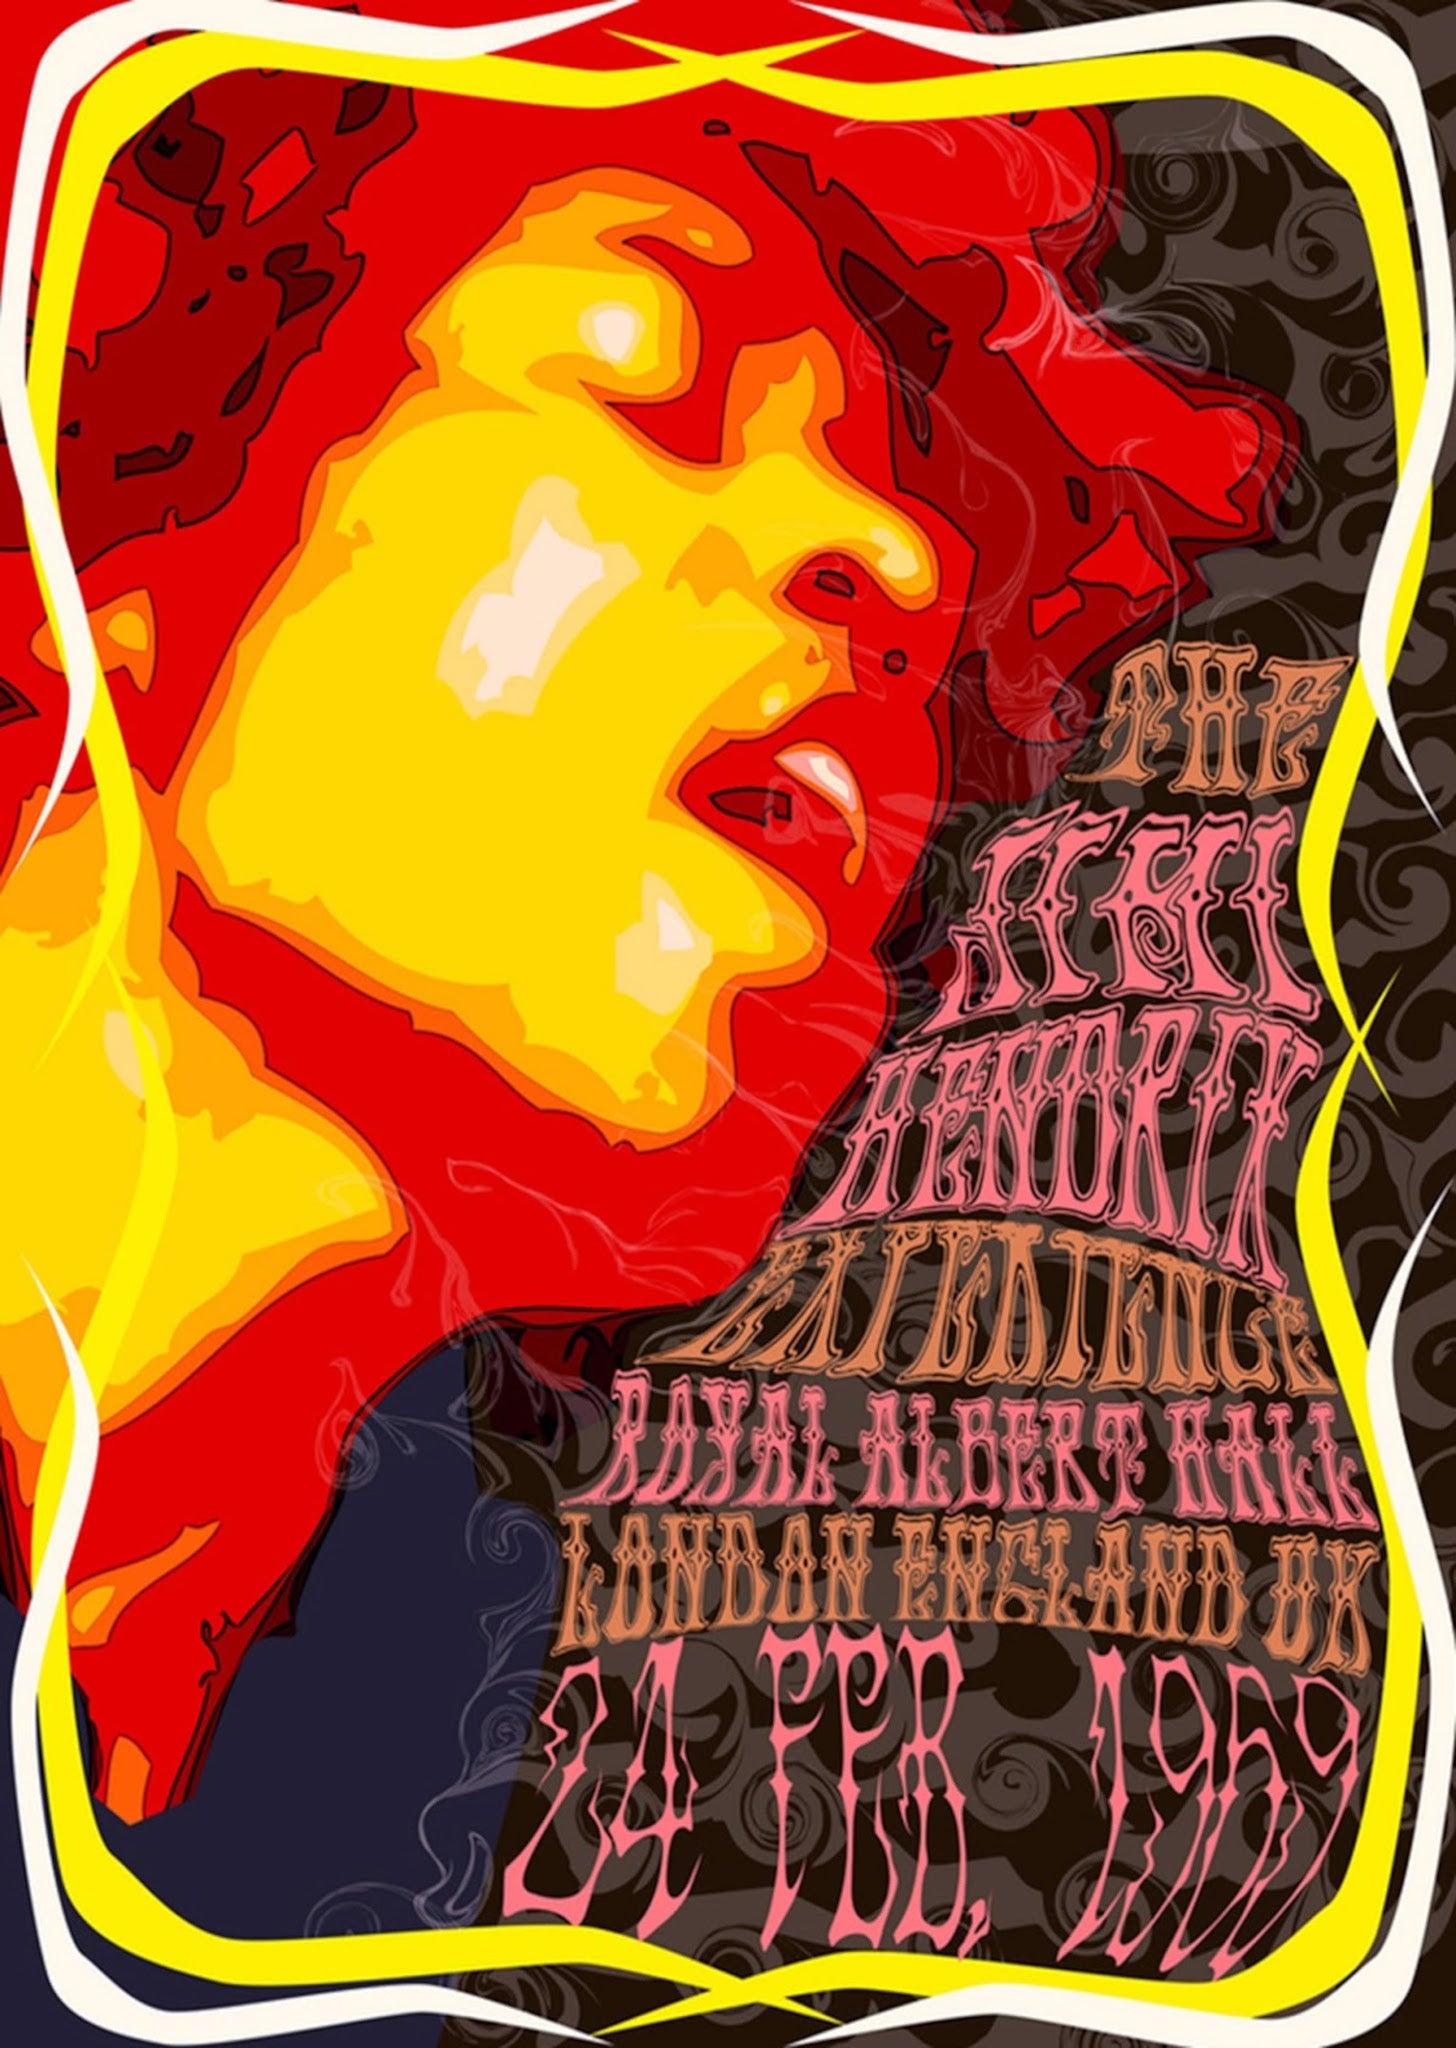 Jimi Hendrix - Royal Albert Hall - 1969 - A4 Mini Print/Poster